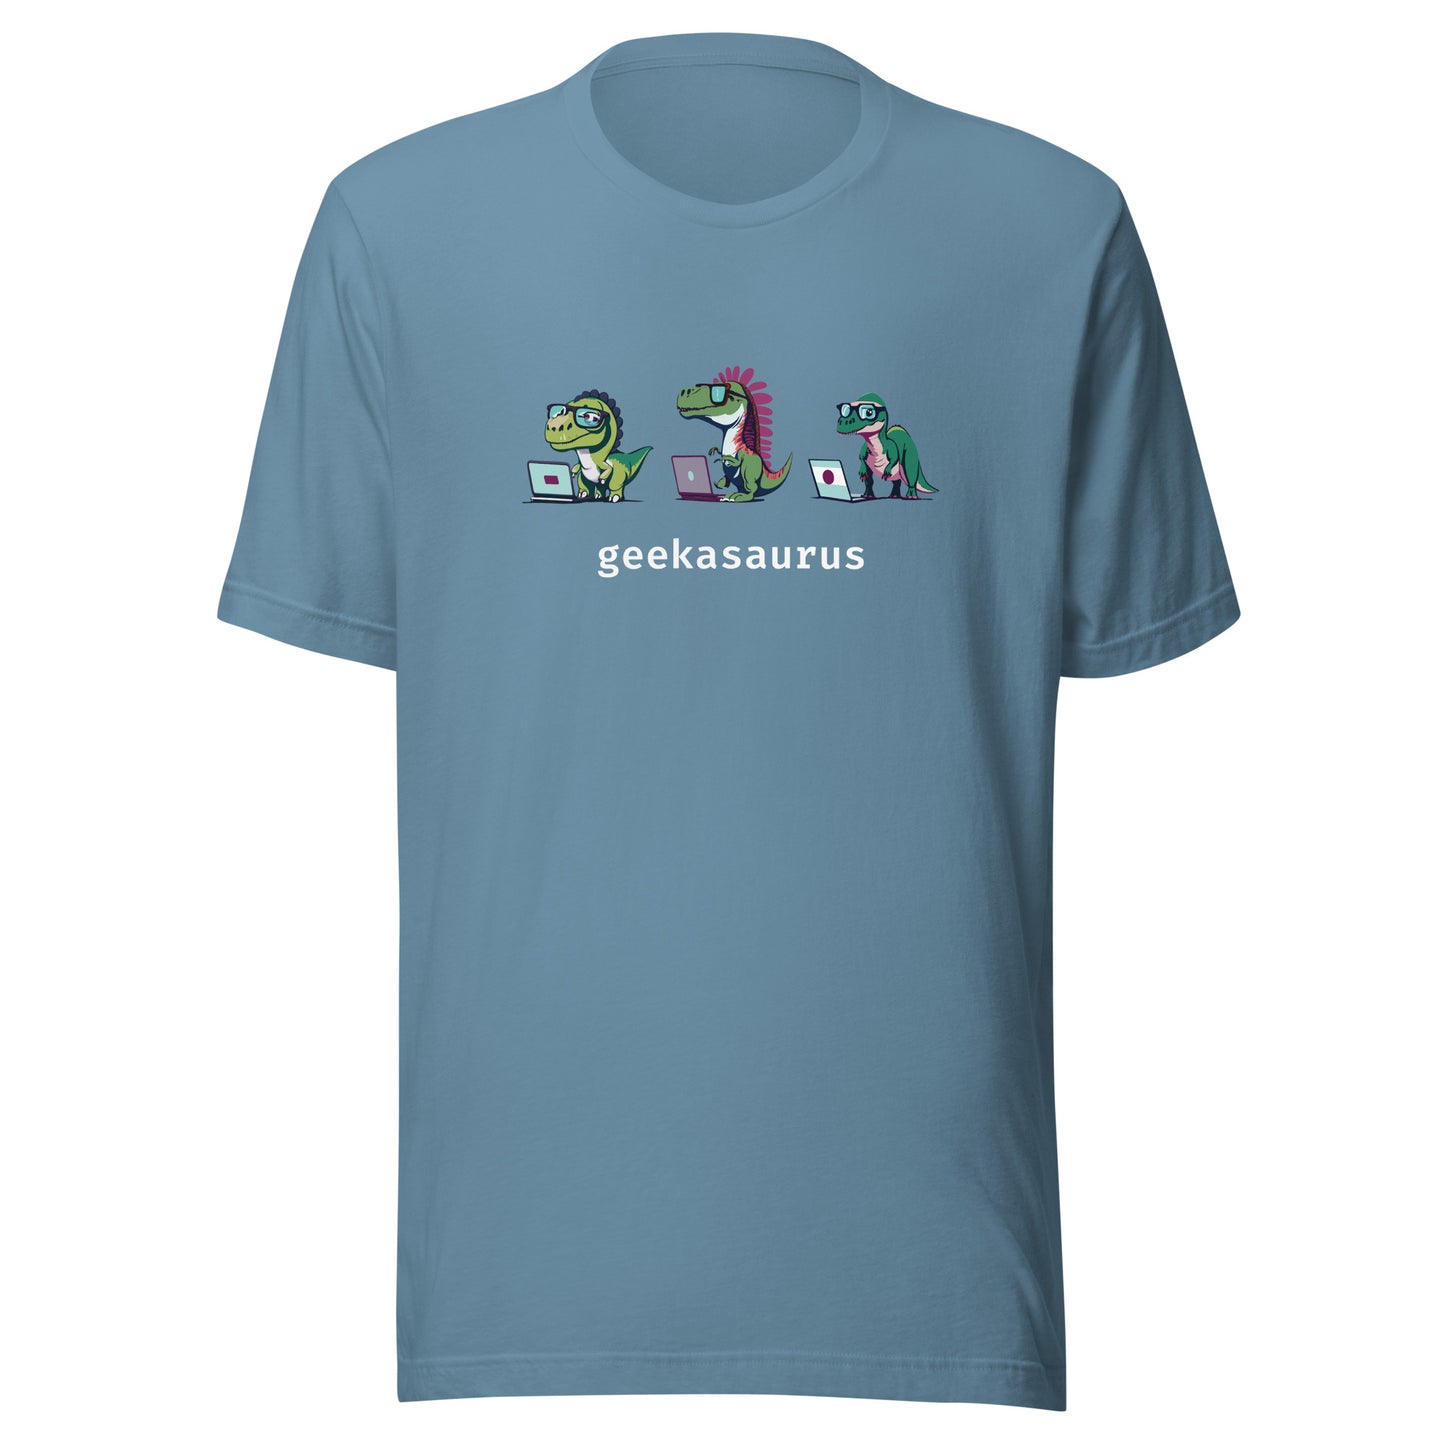 Geekasaurus - White Text - Unisex T-shirt